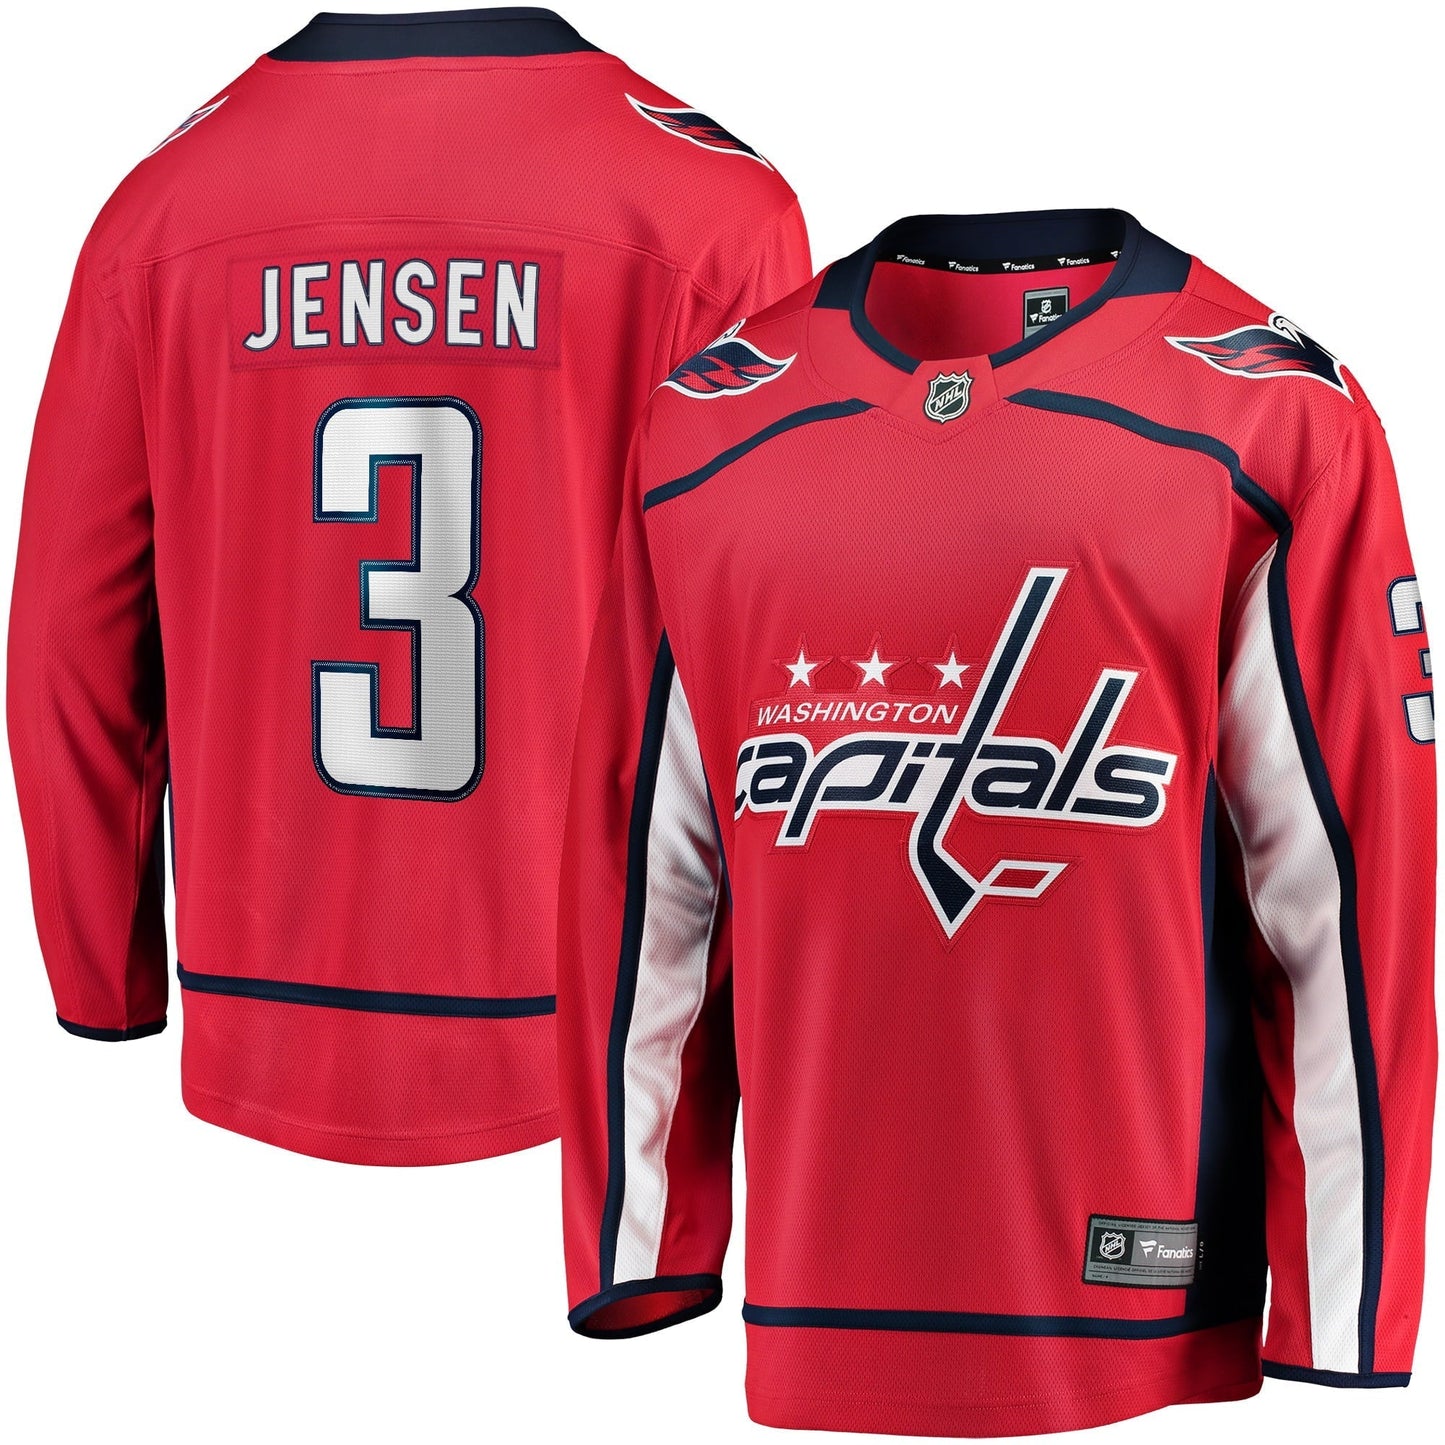 Men's Fanatics Branded Nick Jensen Red Washington Capitals Replica Player Jersey